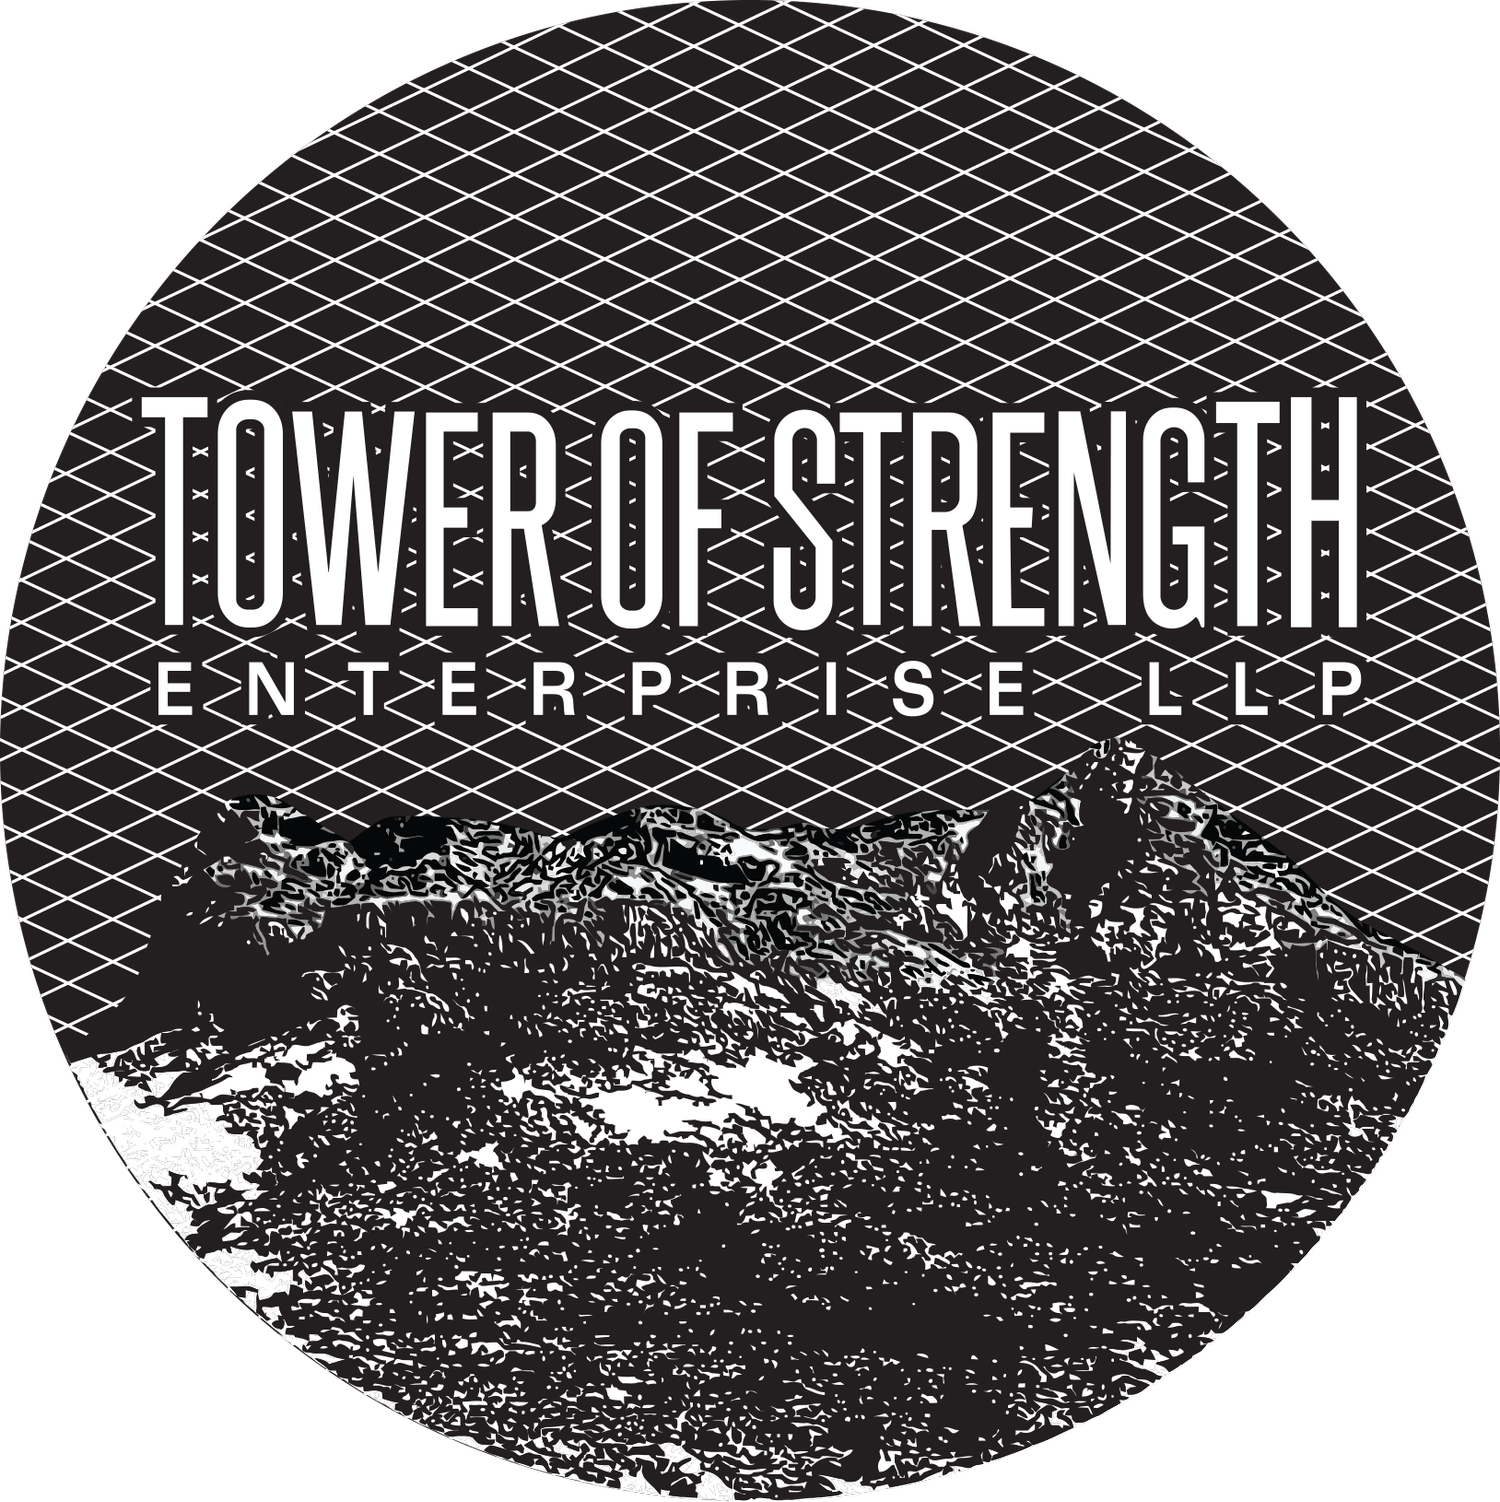 Tower of Strength Enterprise LLP